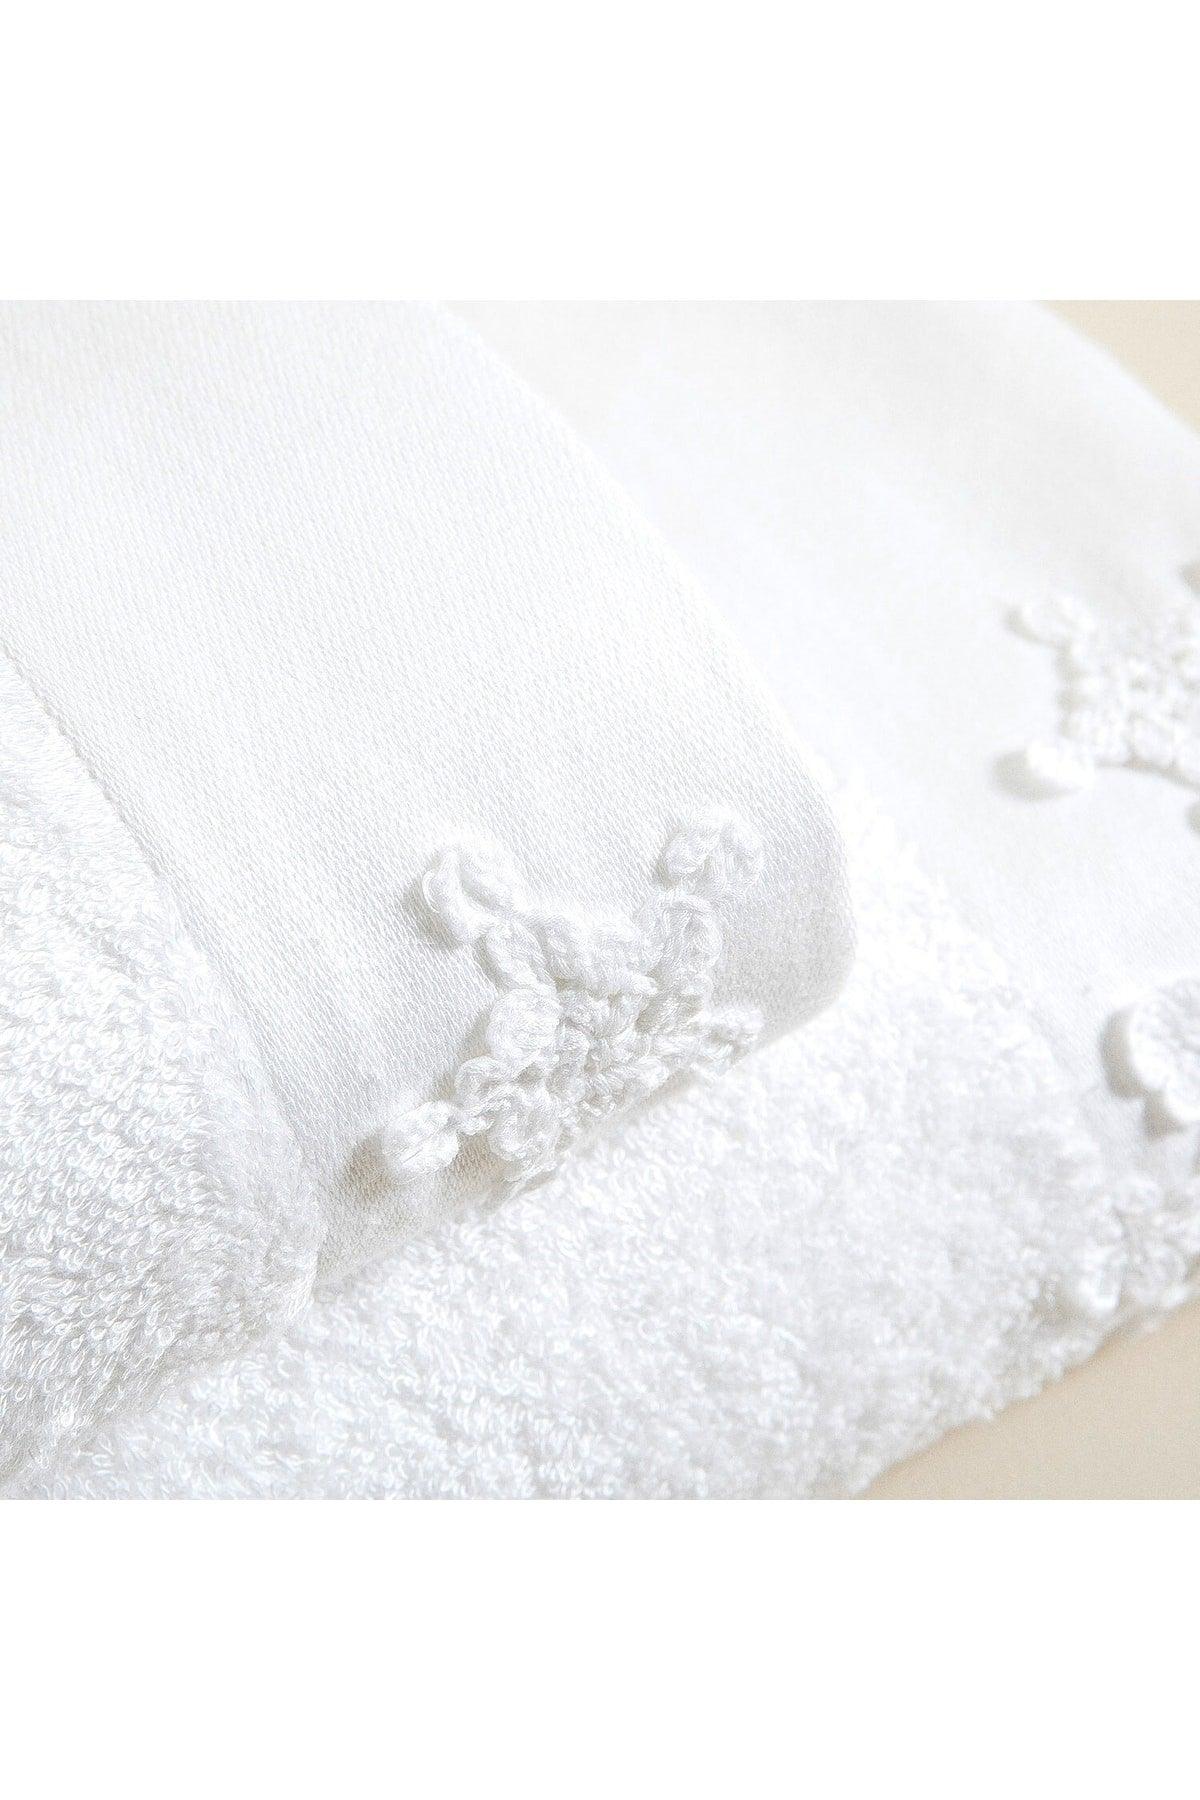 Crystal Hand Towel 30x50 Cm White - Swordslife